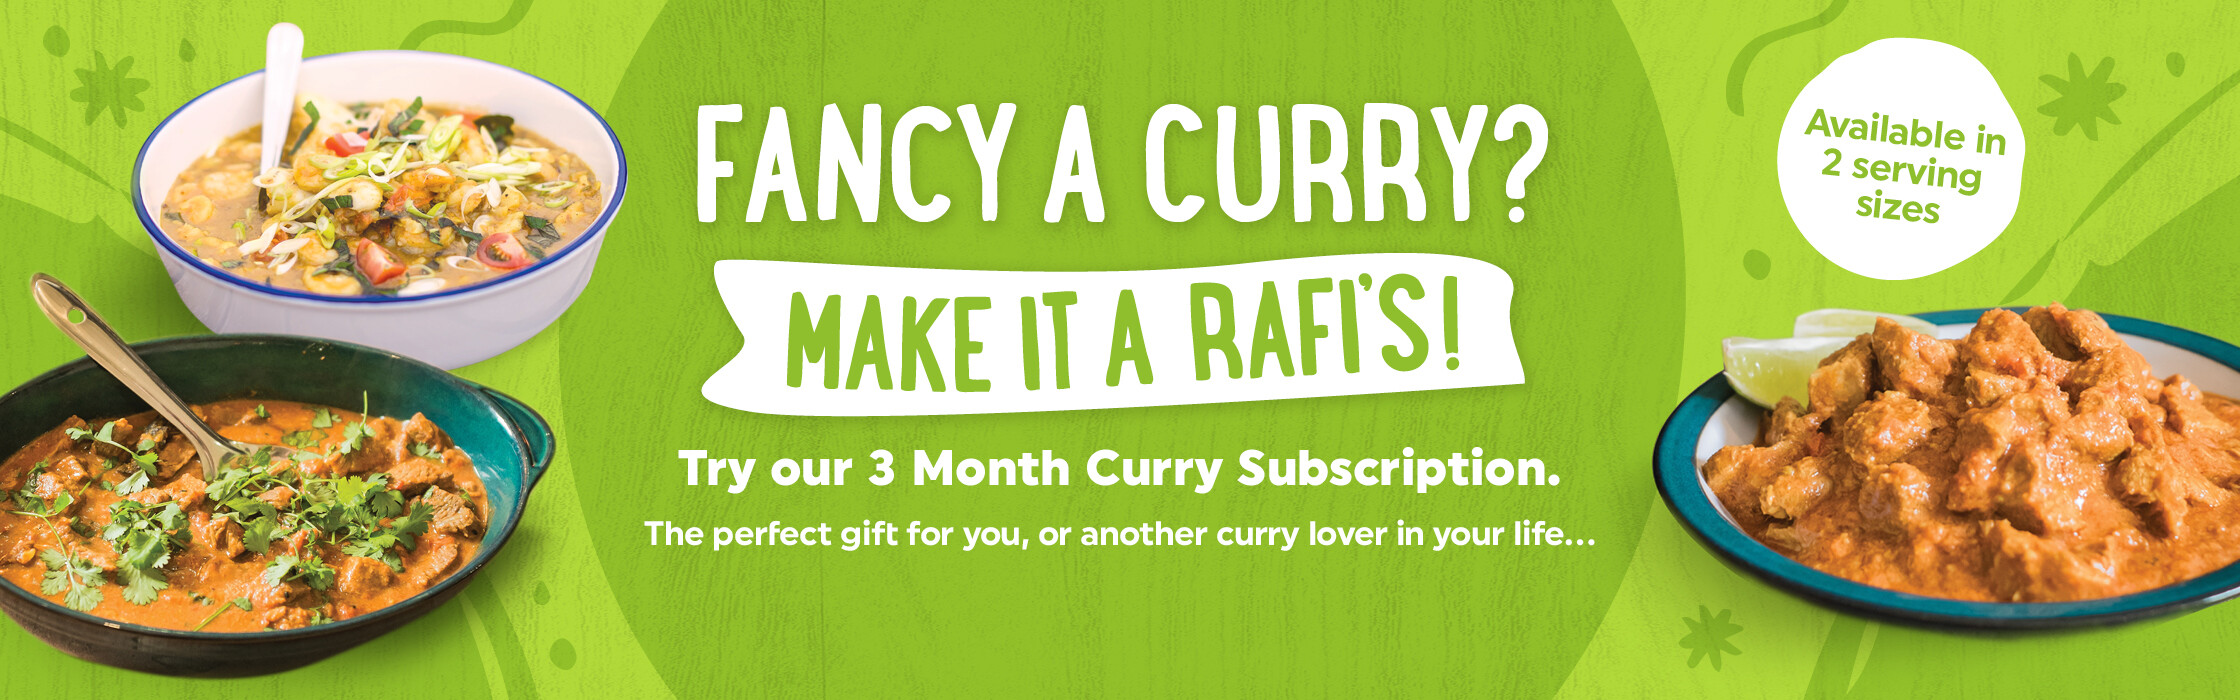 Fancy a curry? Make it a Rafi's